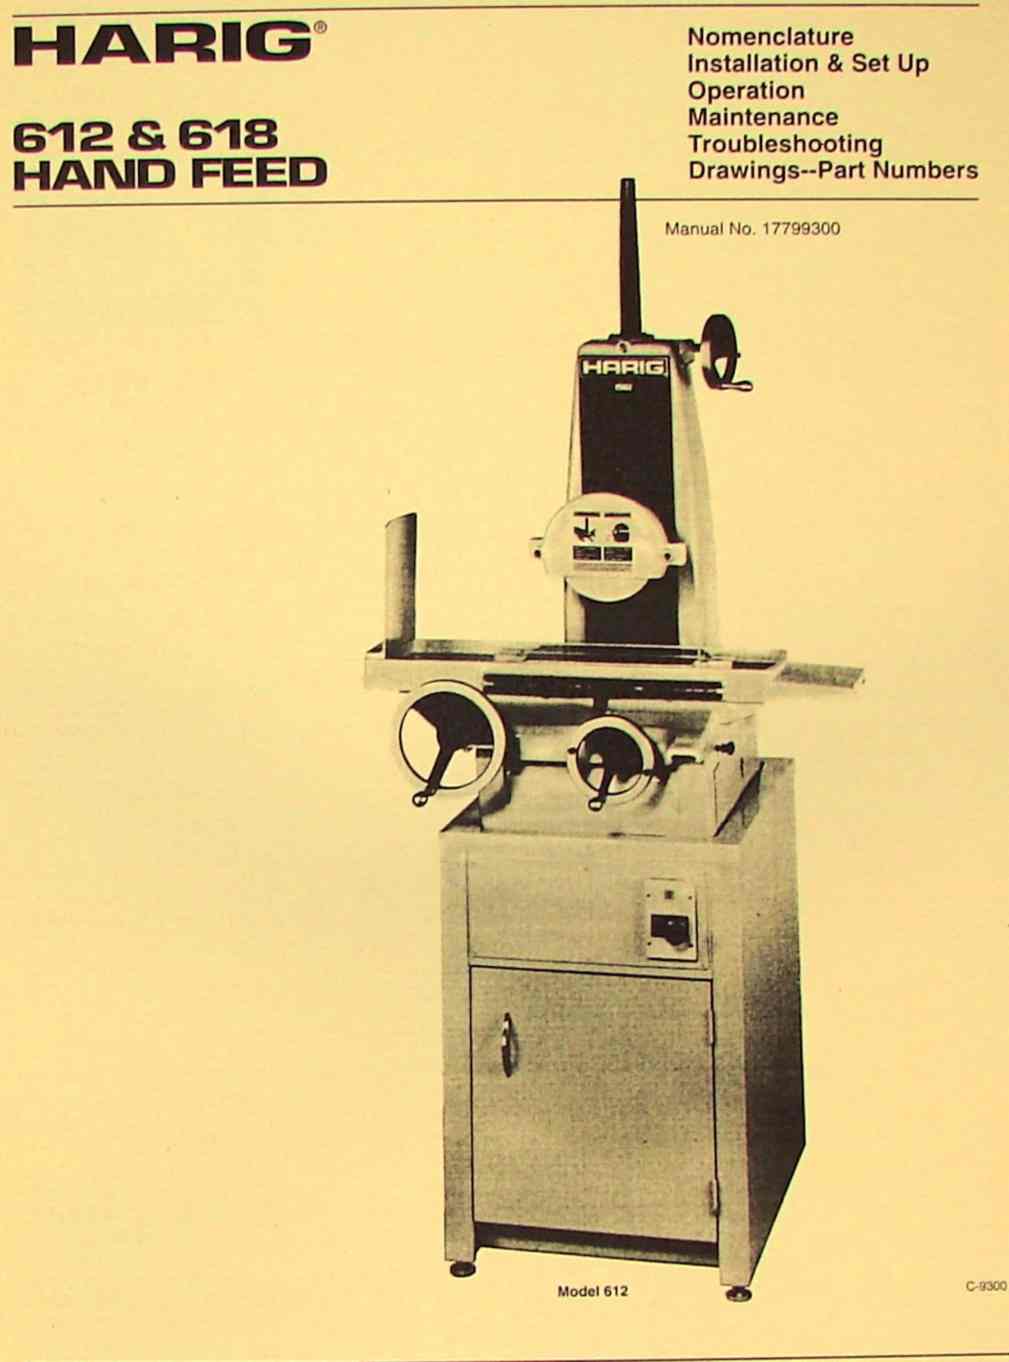 Operation Maintenance & Parts Manual 1982 Surface Grinder S/N 21530 Reid 618HR 